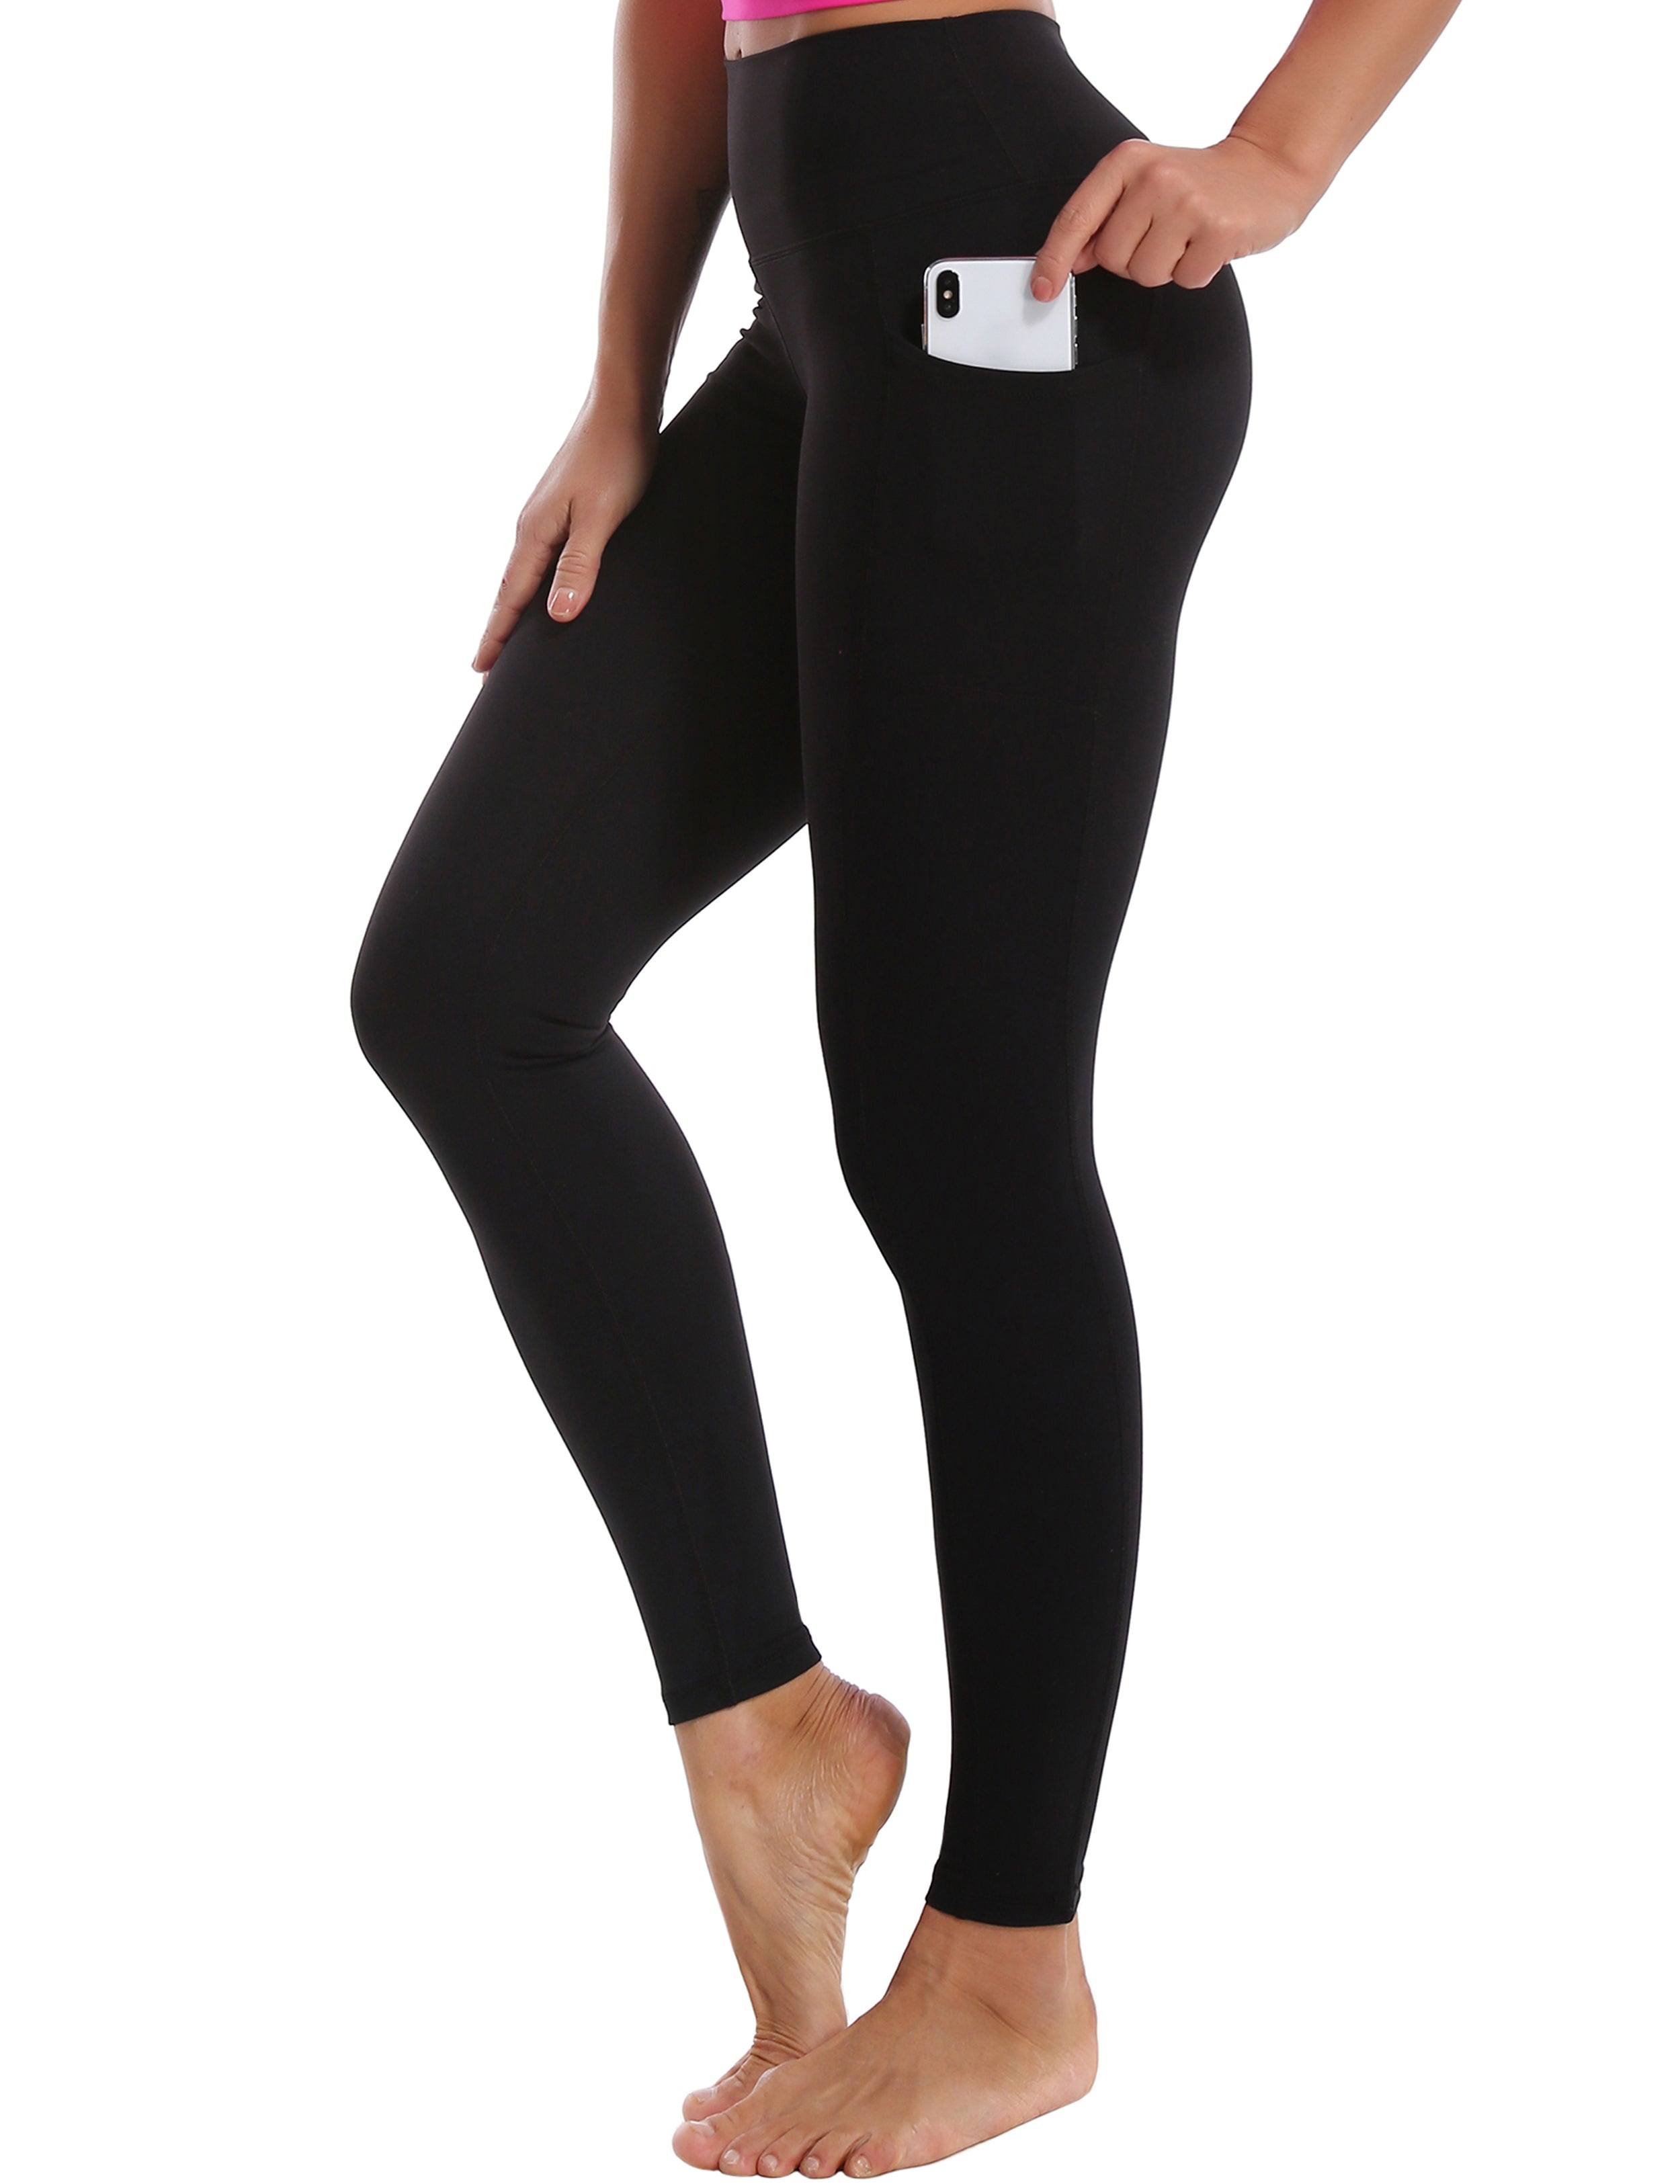 High Waisted Yoga Pants 7/8 Length Leggings with Pockets black